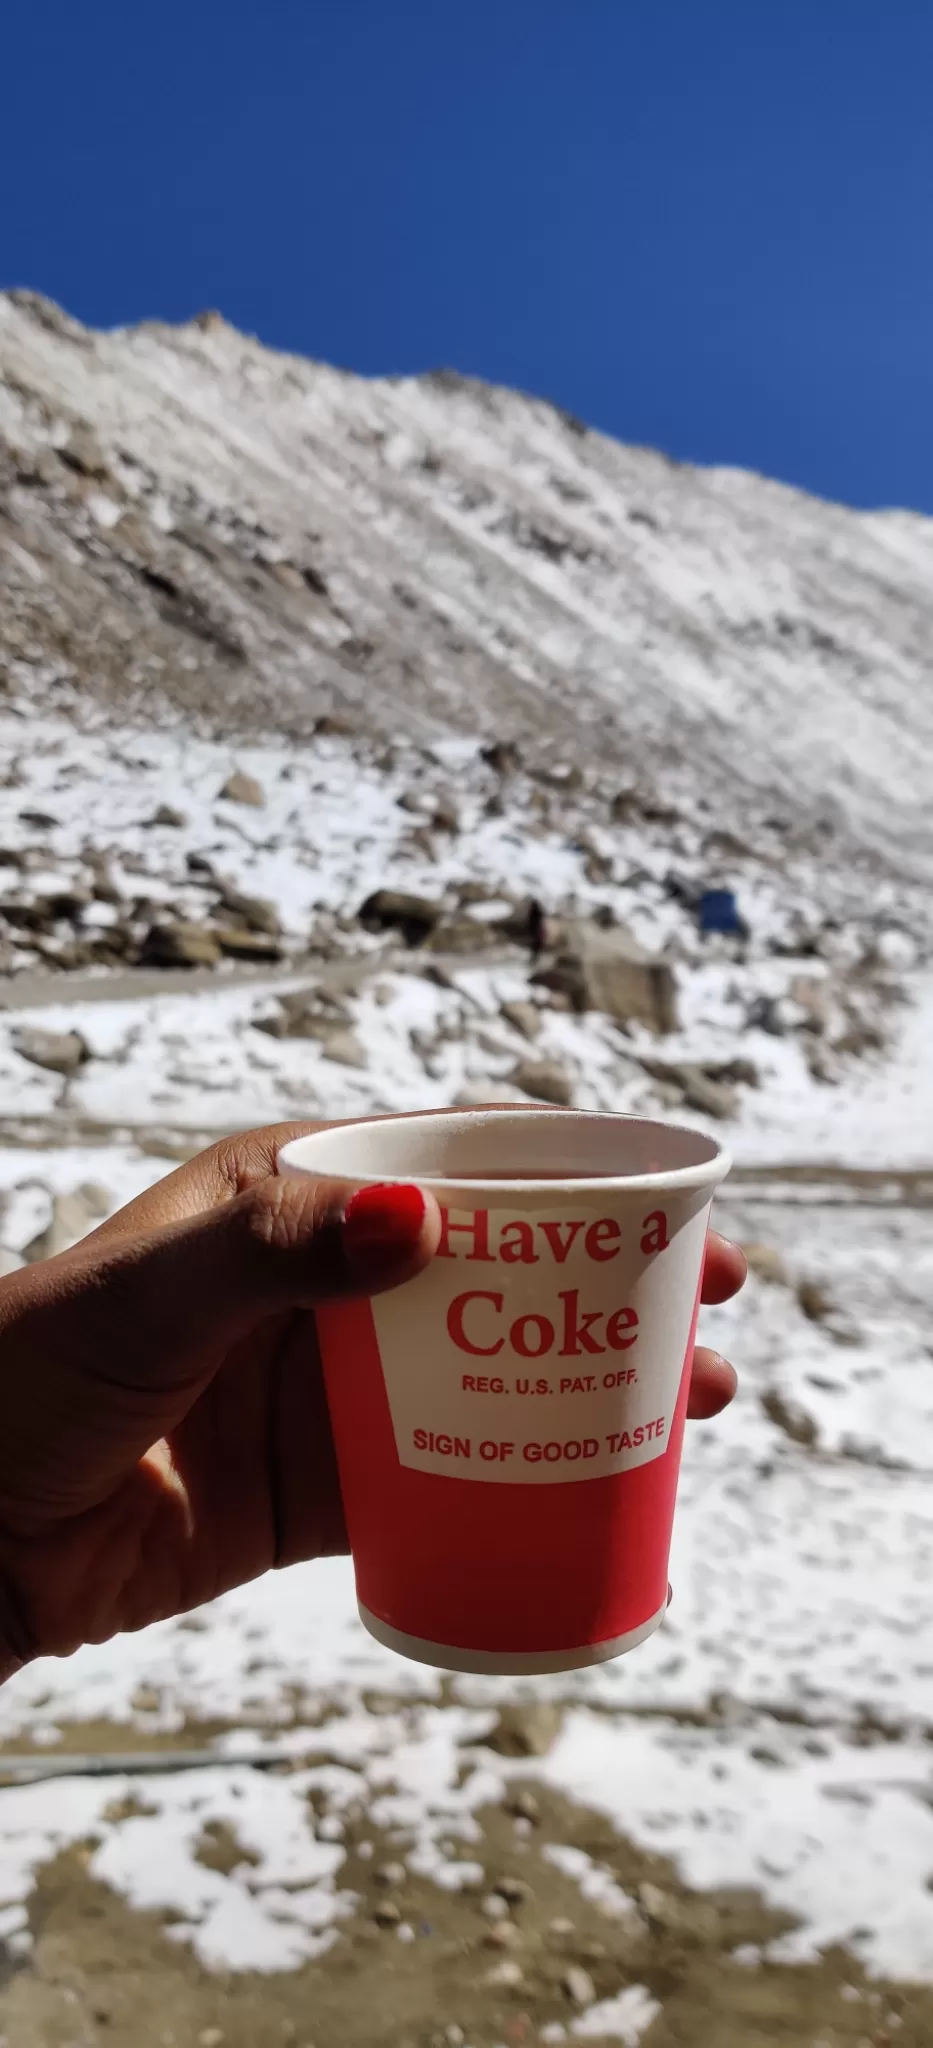 Photo of Ladakh By Anita rolekar sulakhe